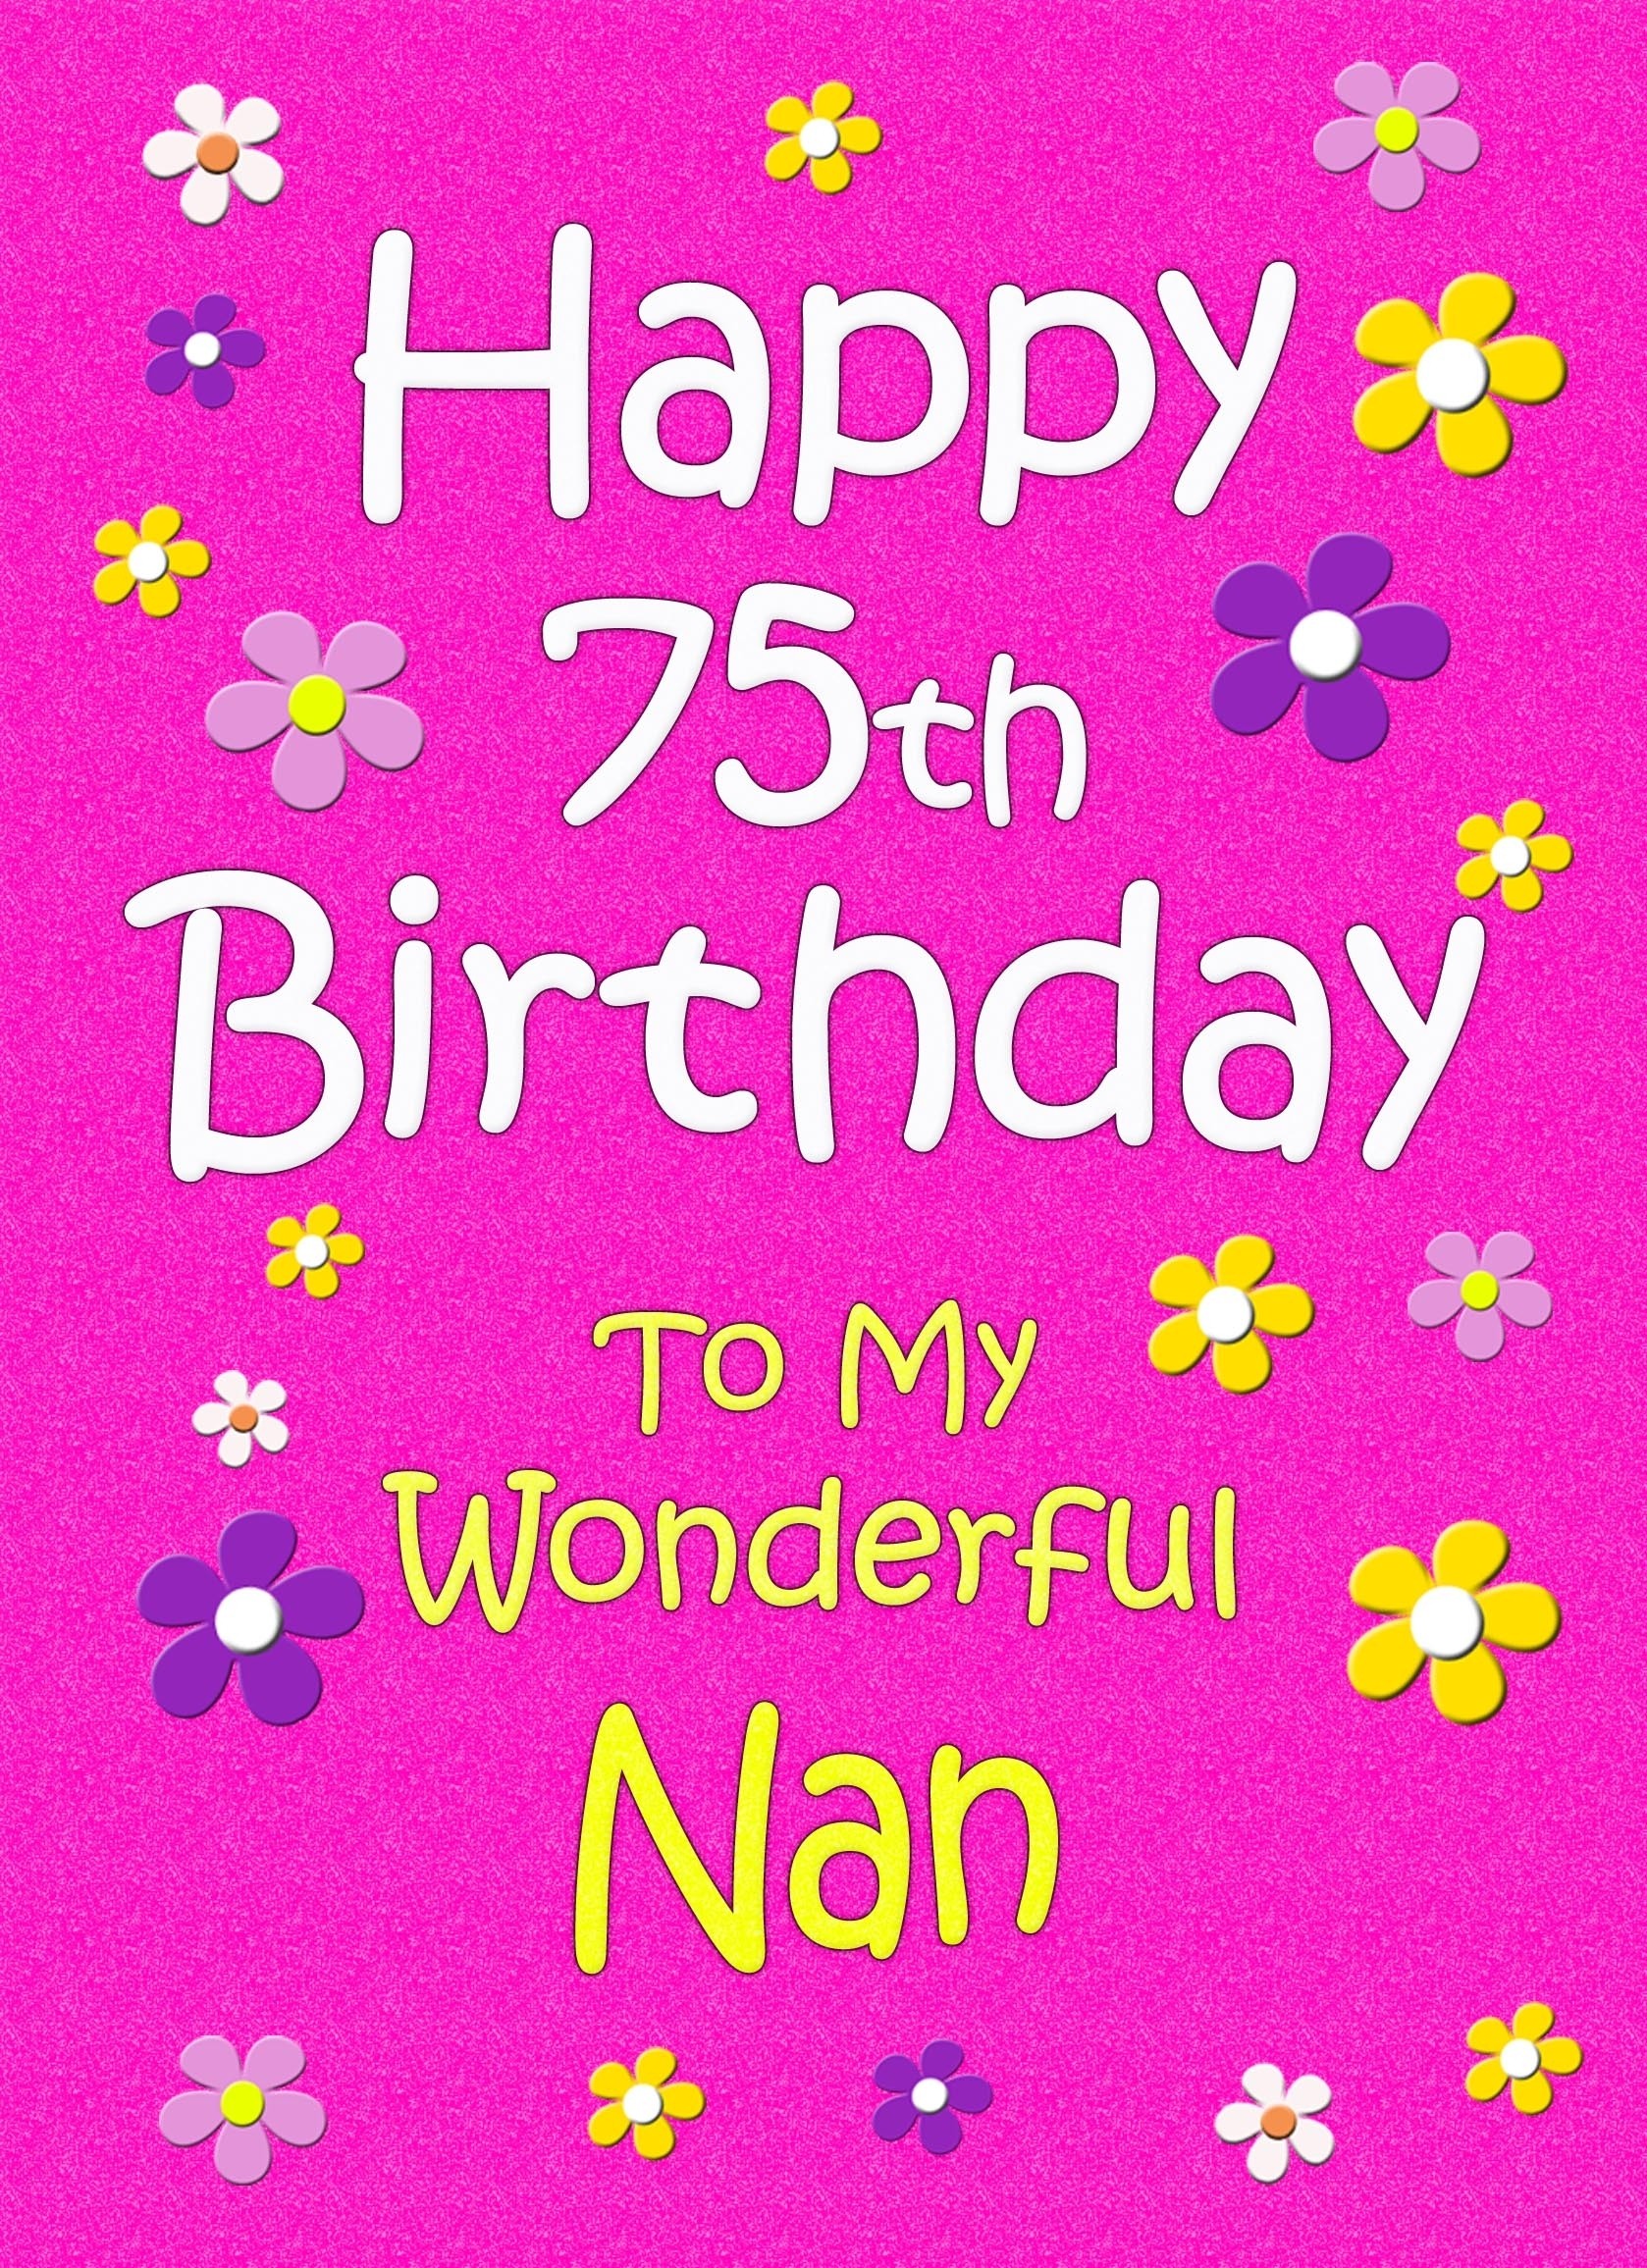 Nan 75th Birthday Card (Pink)